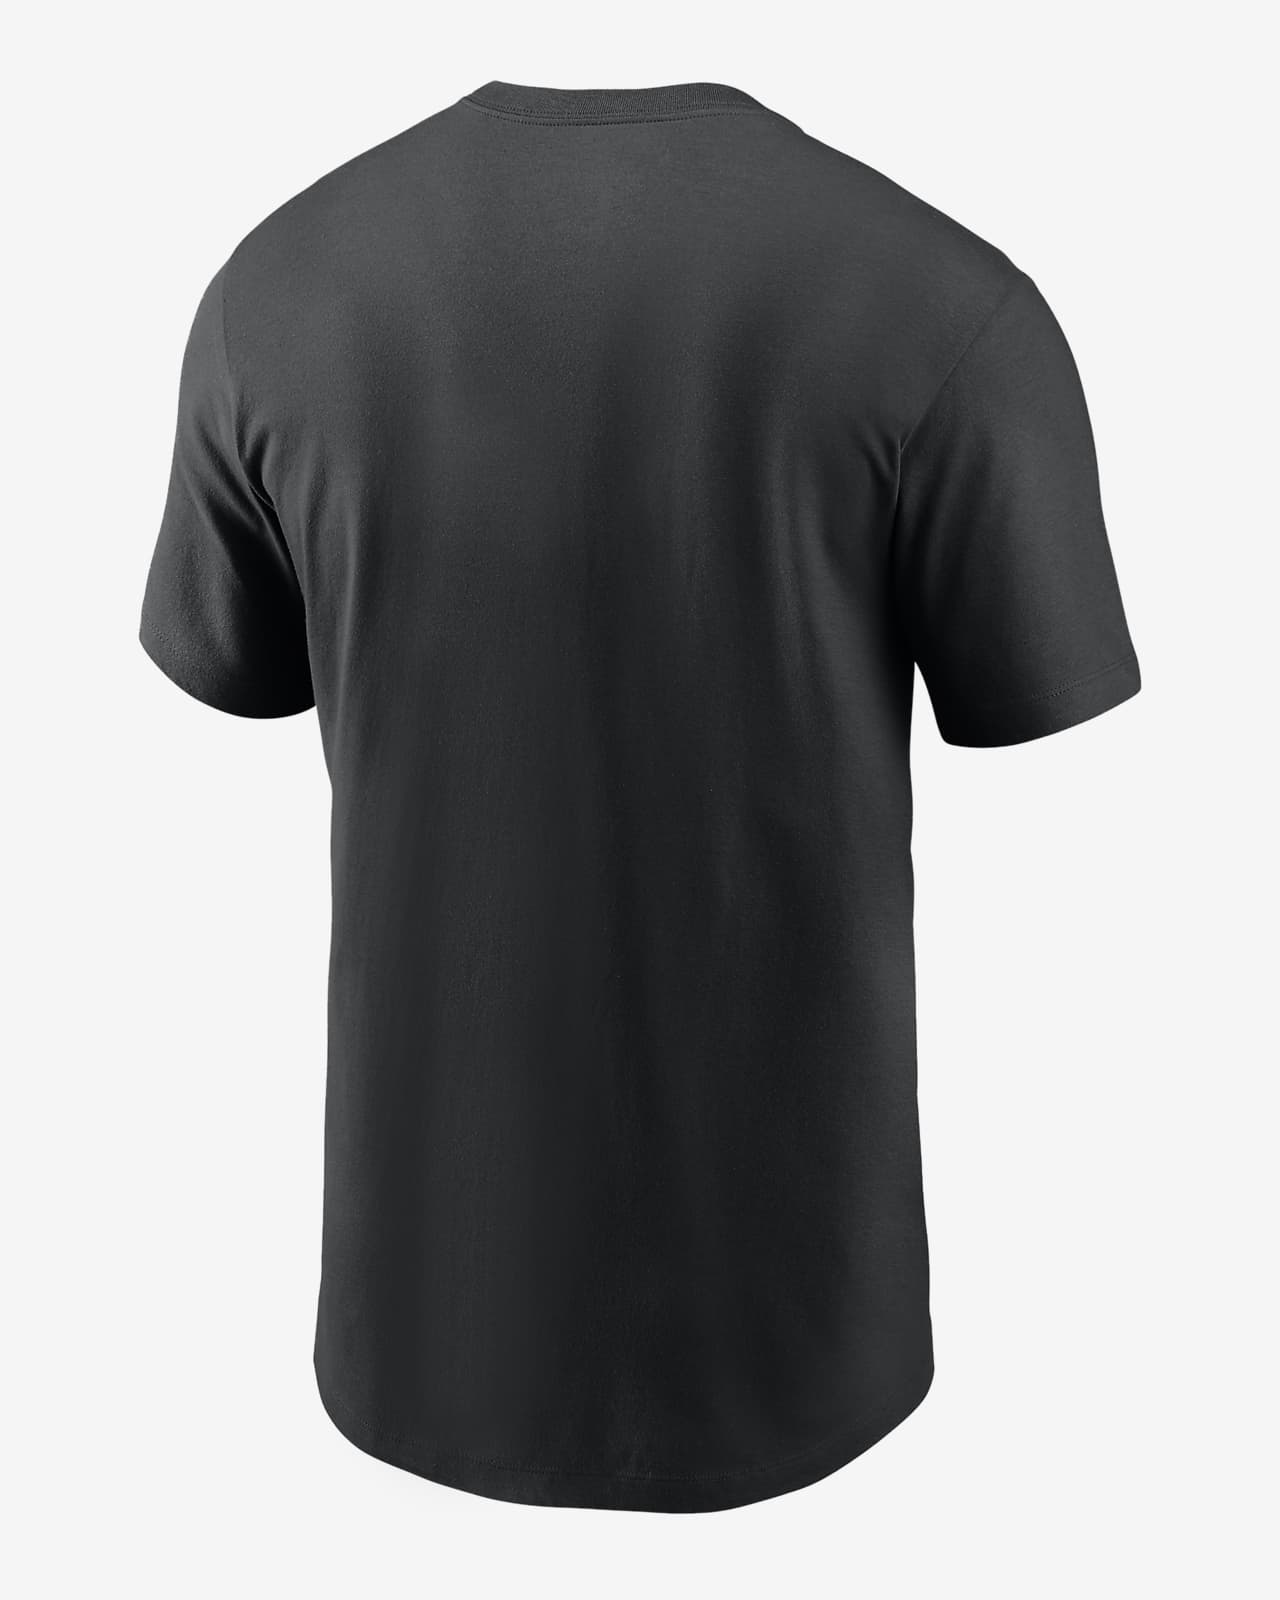 Nike Dri-FIT Logo Legend (MLB San Diego Padres) Men's T-Shirt.